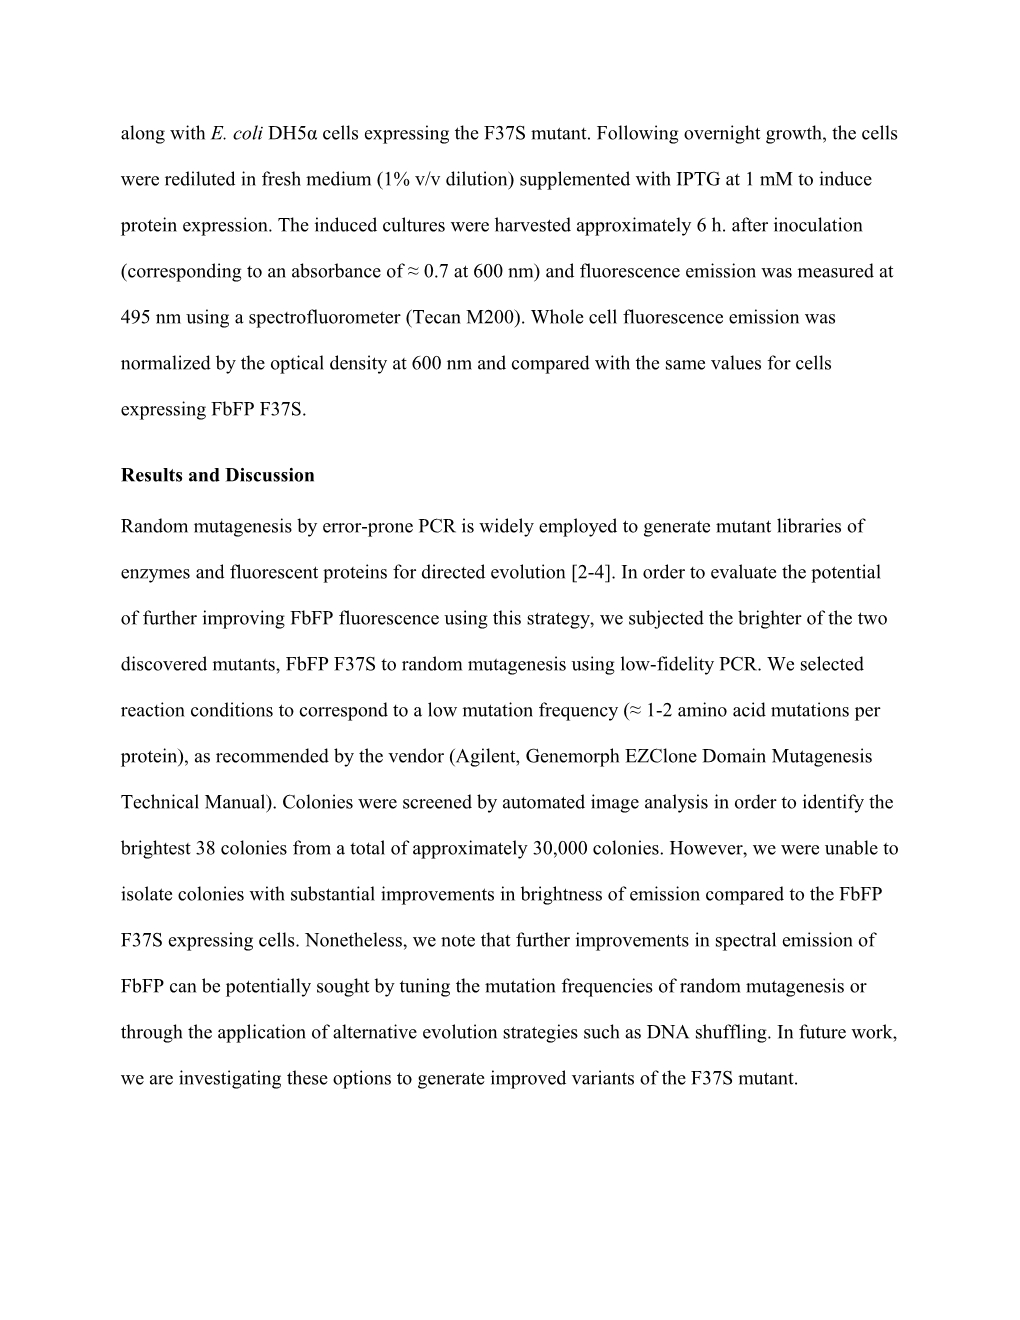 Error-Prone PCR Mutagenesis of Fbfp F37S Bright Mutant